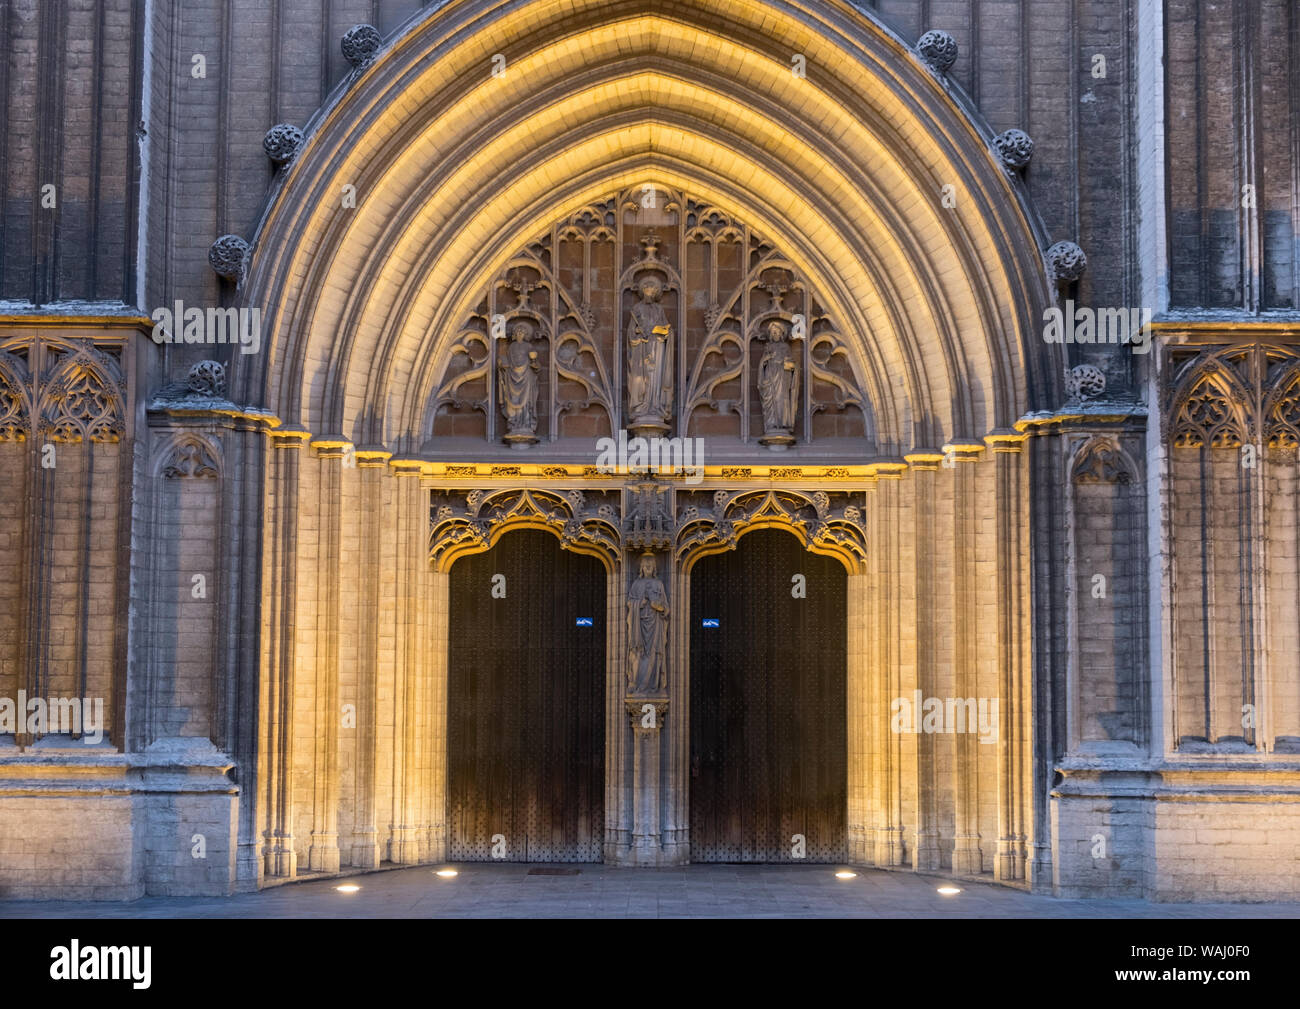 Cathedral of Our Lady doorway Antwerp Belgium Stock Photo